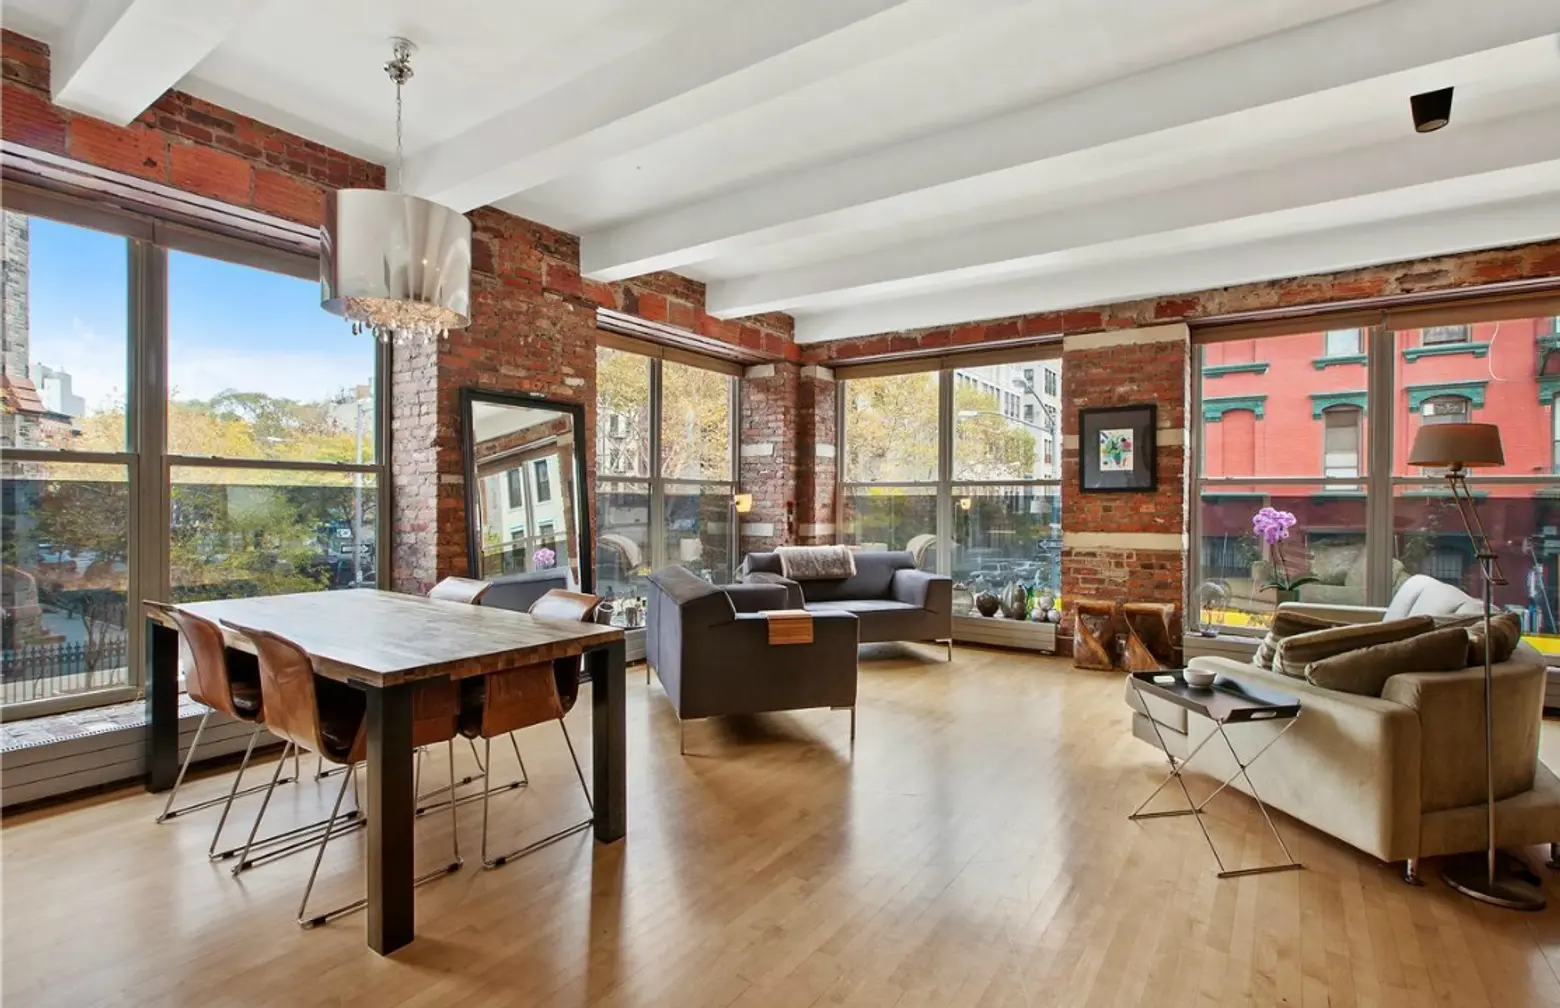 $1.25M Lower East Side Loft Offers a Beautiful Blank Slate and a Glass Bedroom Wall